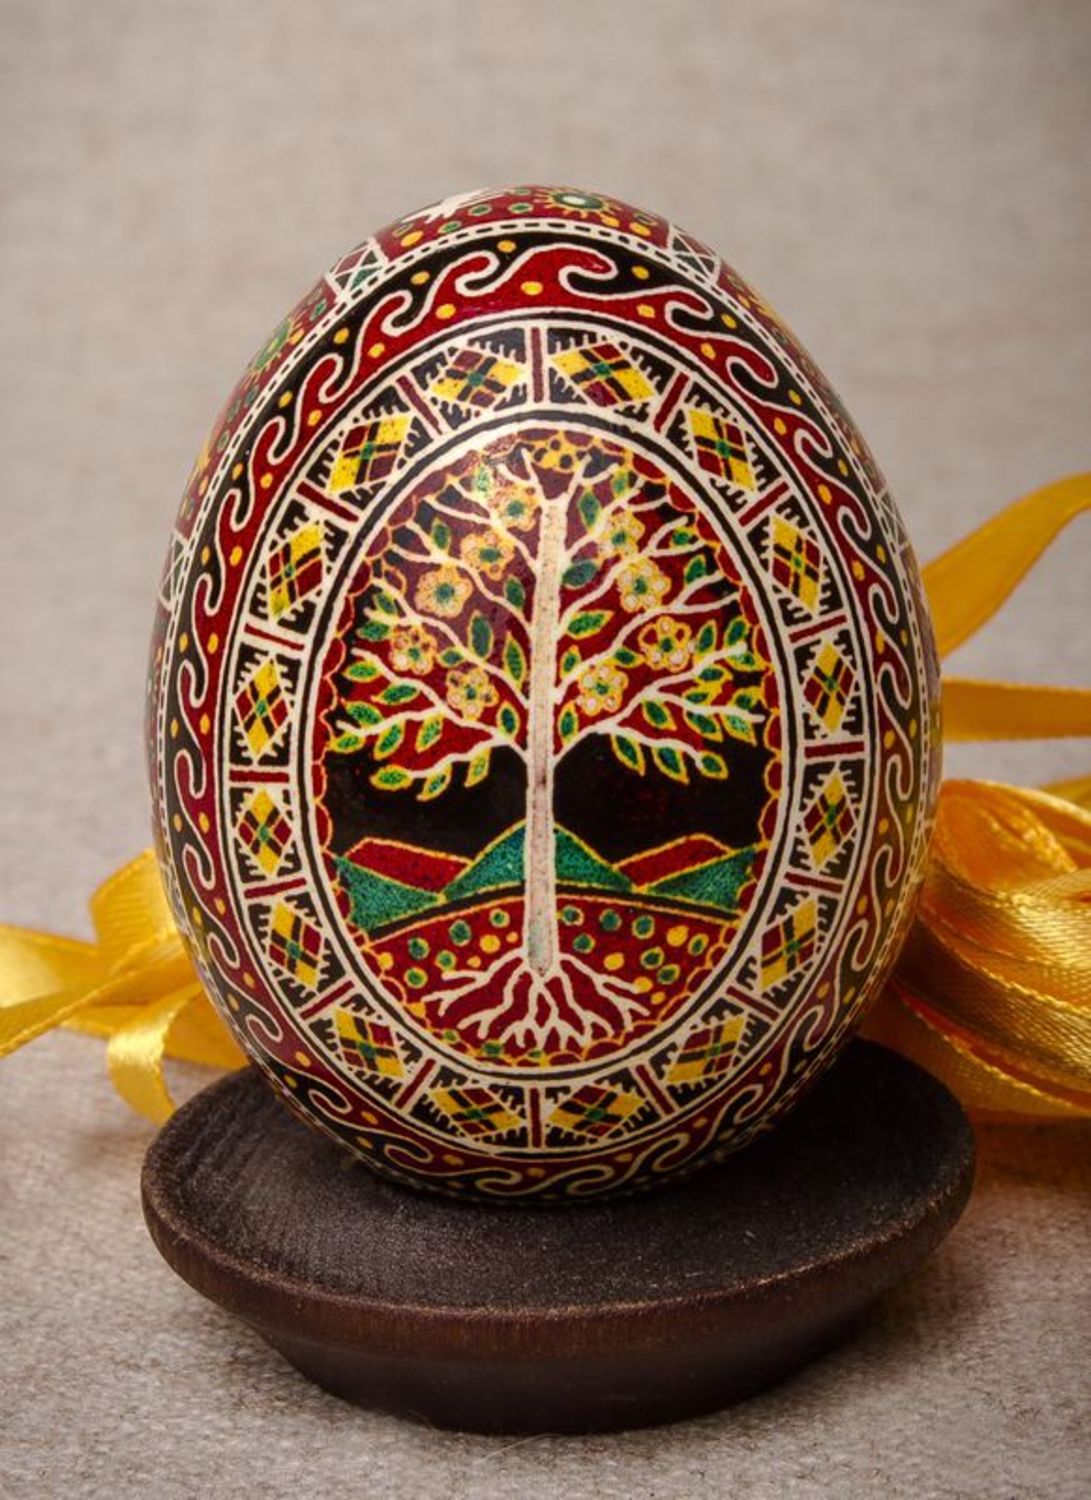 Huevo de Pascua “Árbol de la vida” foto 1